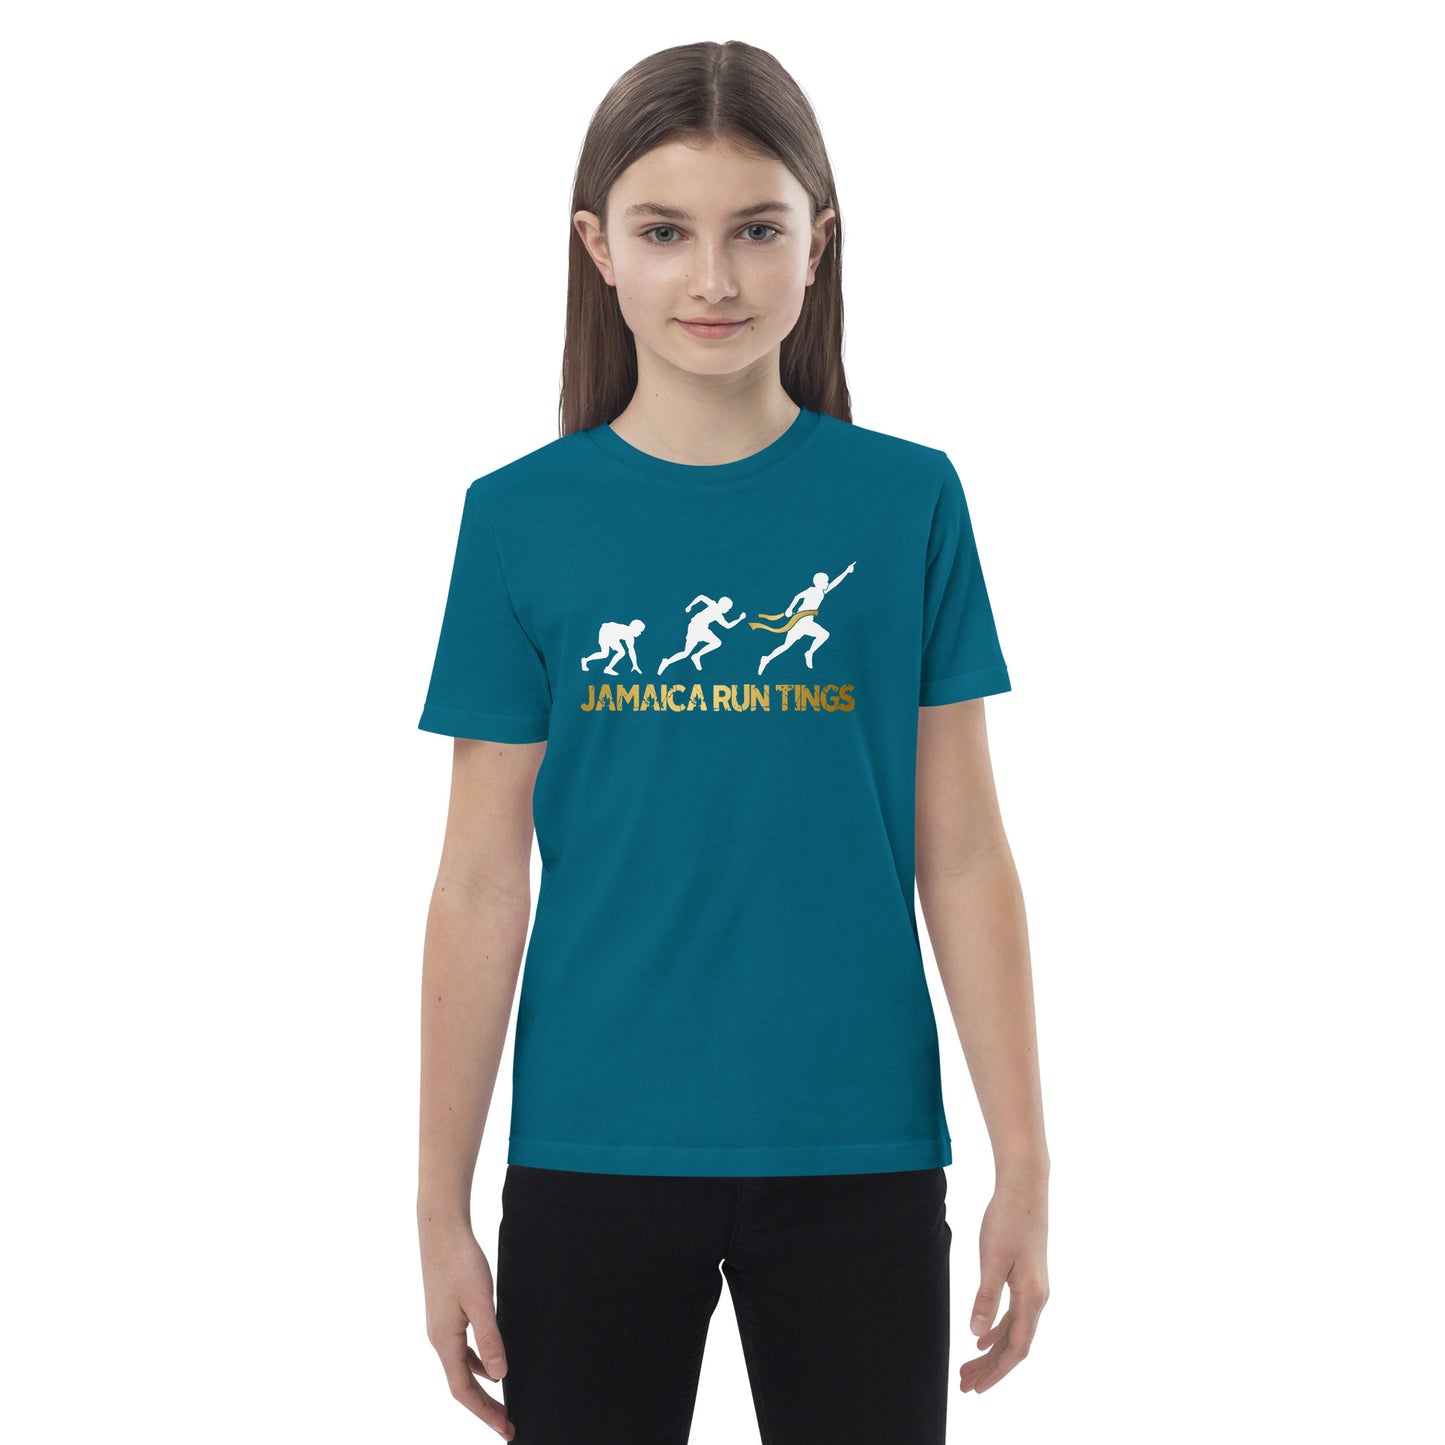 Organic cotton kids "Jamaica run tings" t-shirt